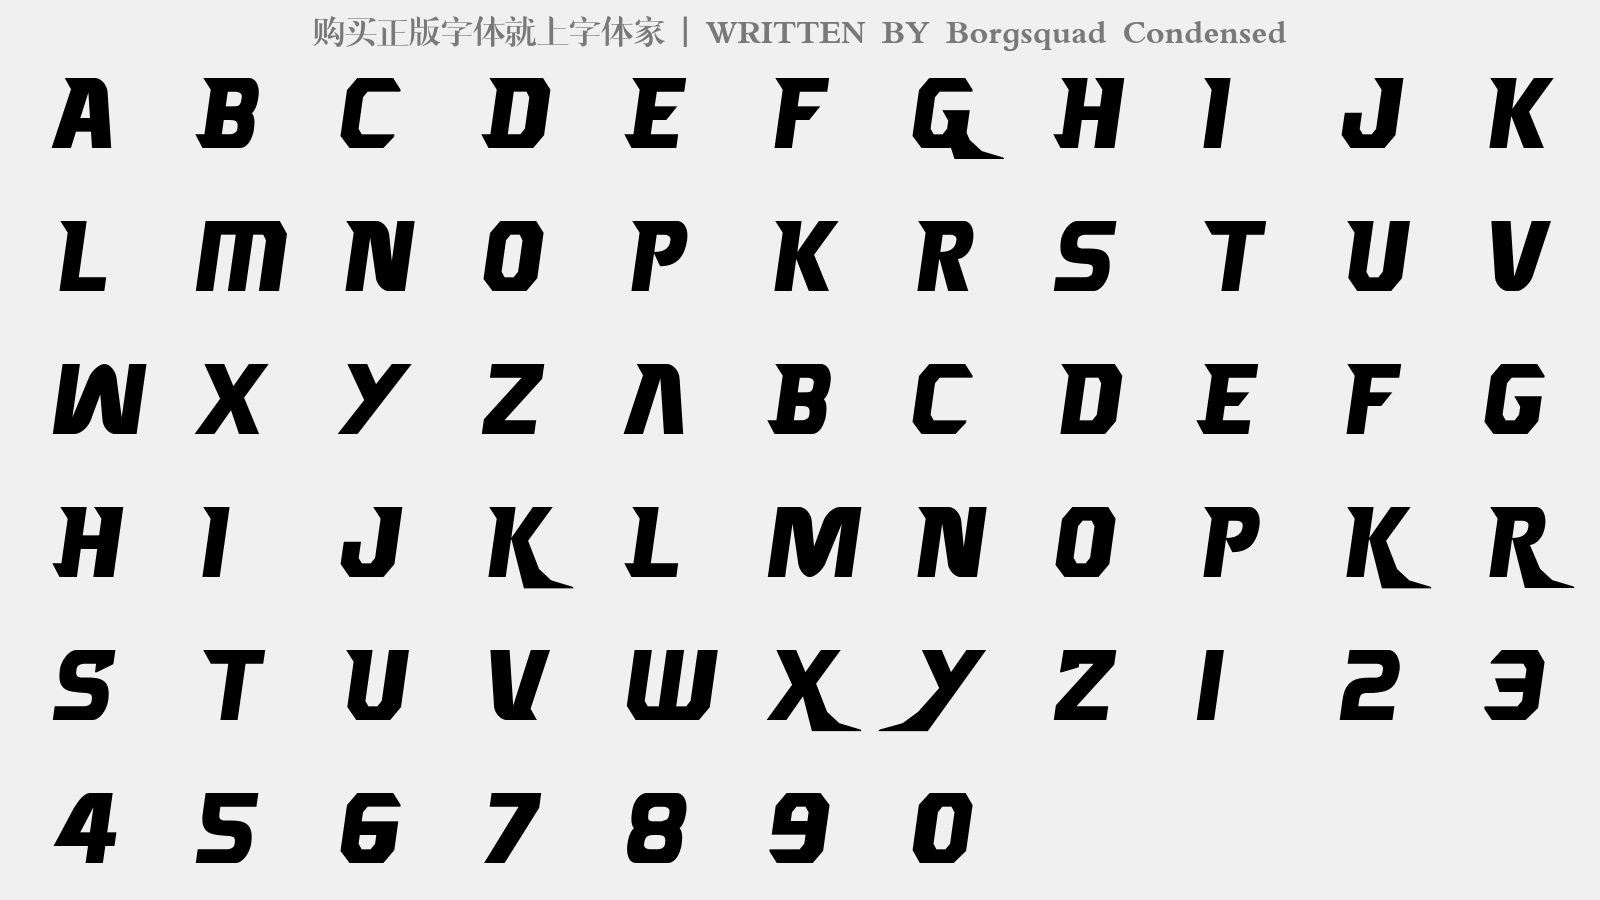 Borgsquad Condensed - 大写字母/小写字母/数字